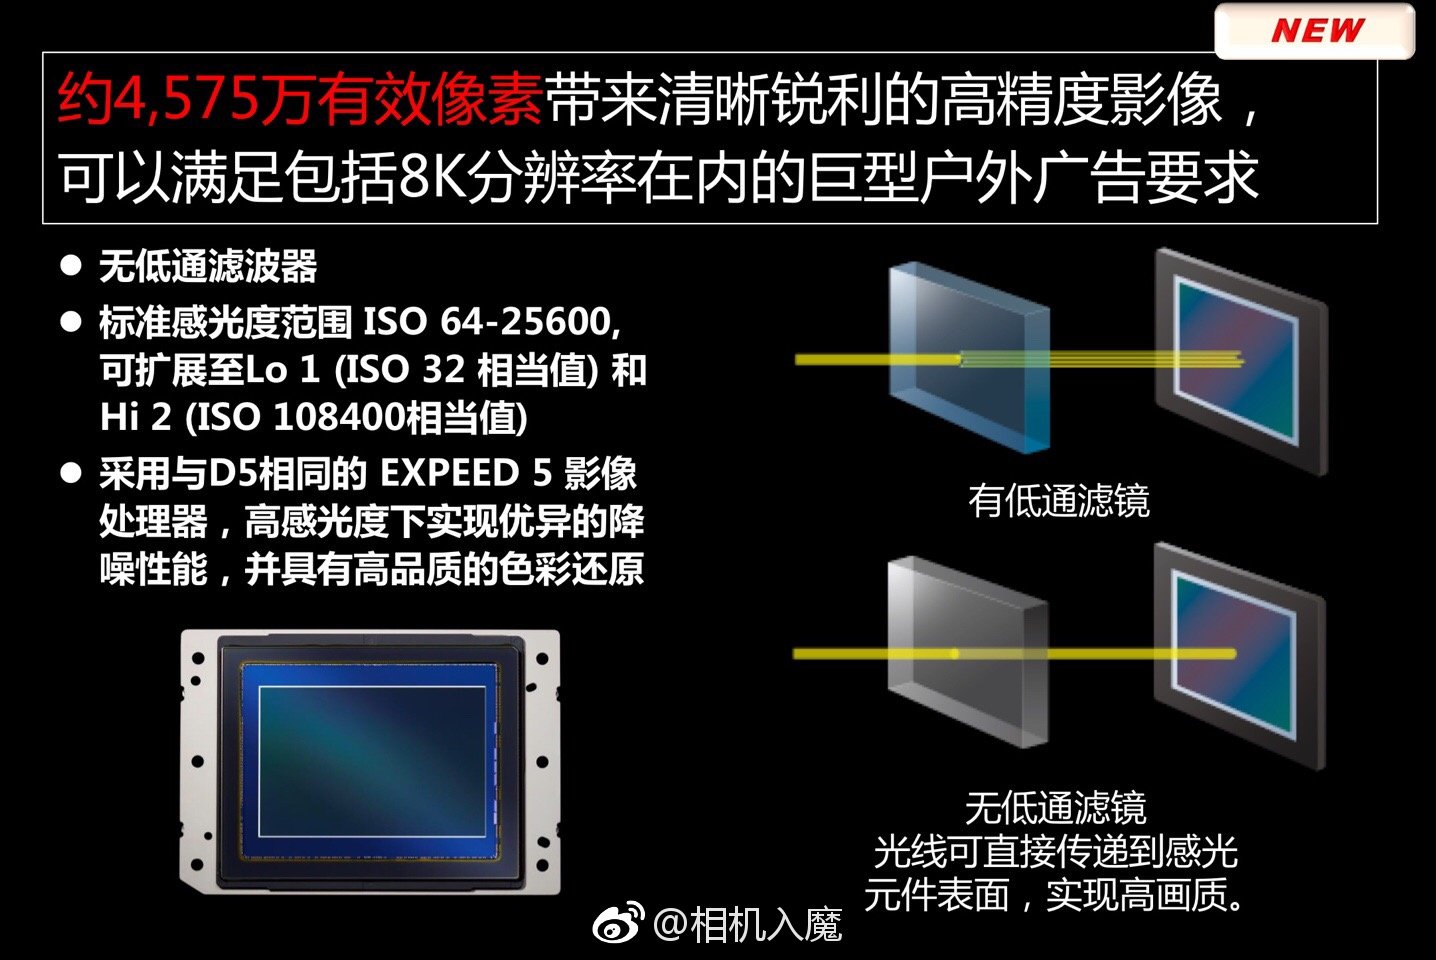 Nikon-D850-presentation-slides3_tinhte.vn.jpg